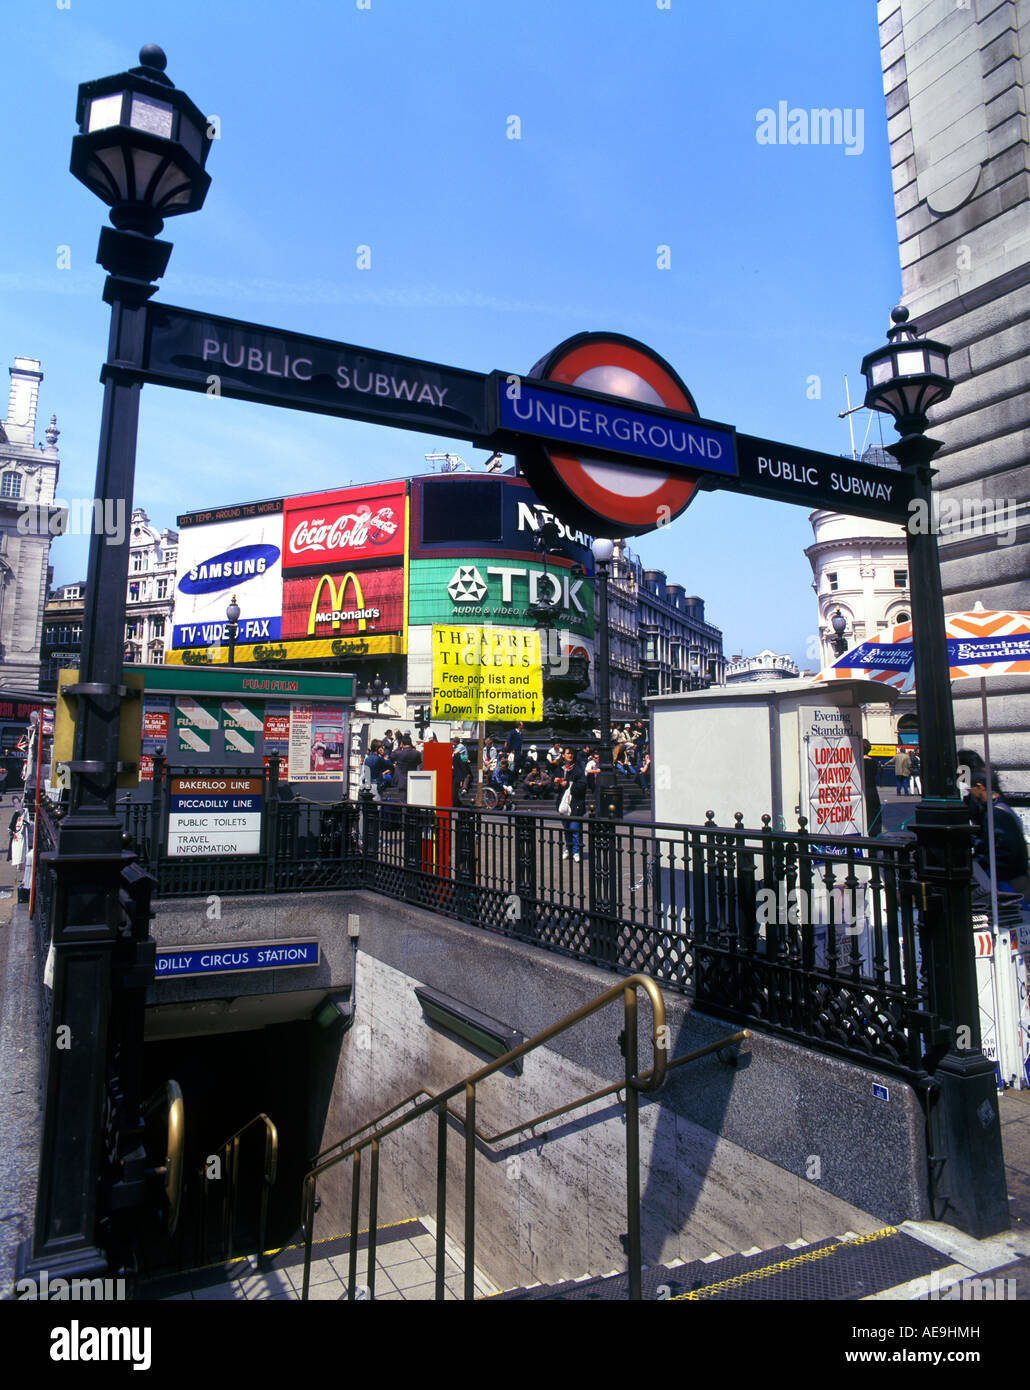 2000 HISTORICAL STREET SCENE UNDERGROUND ENTRANCE PICCADILLY CIRCUS LONDON ENGLAND UK Stock Photo